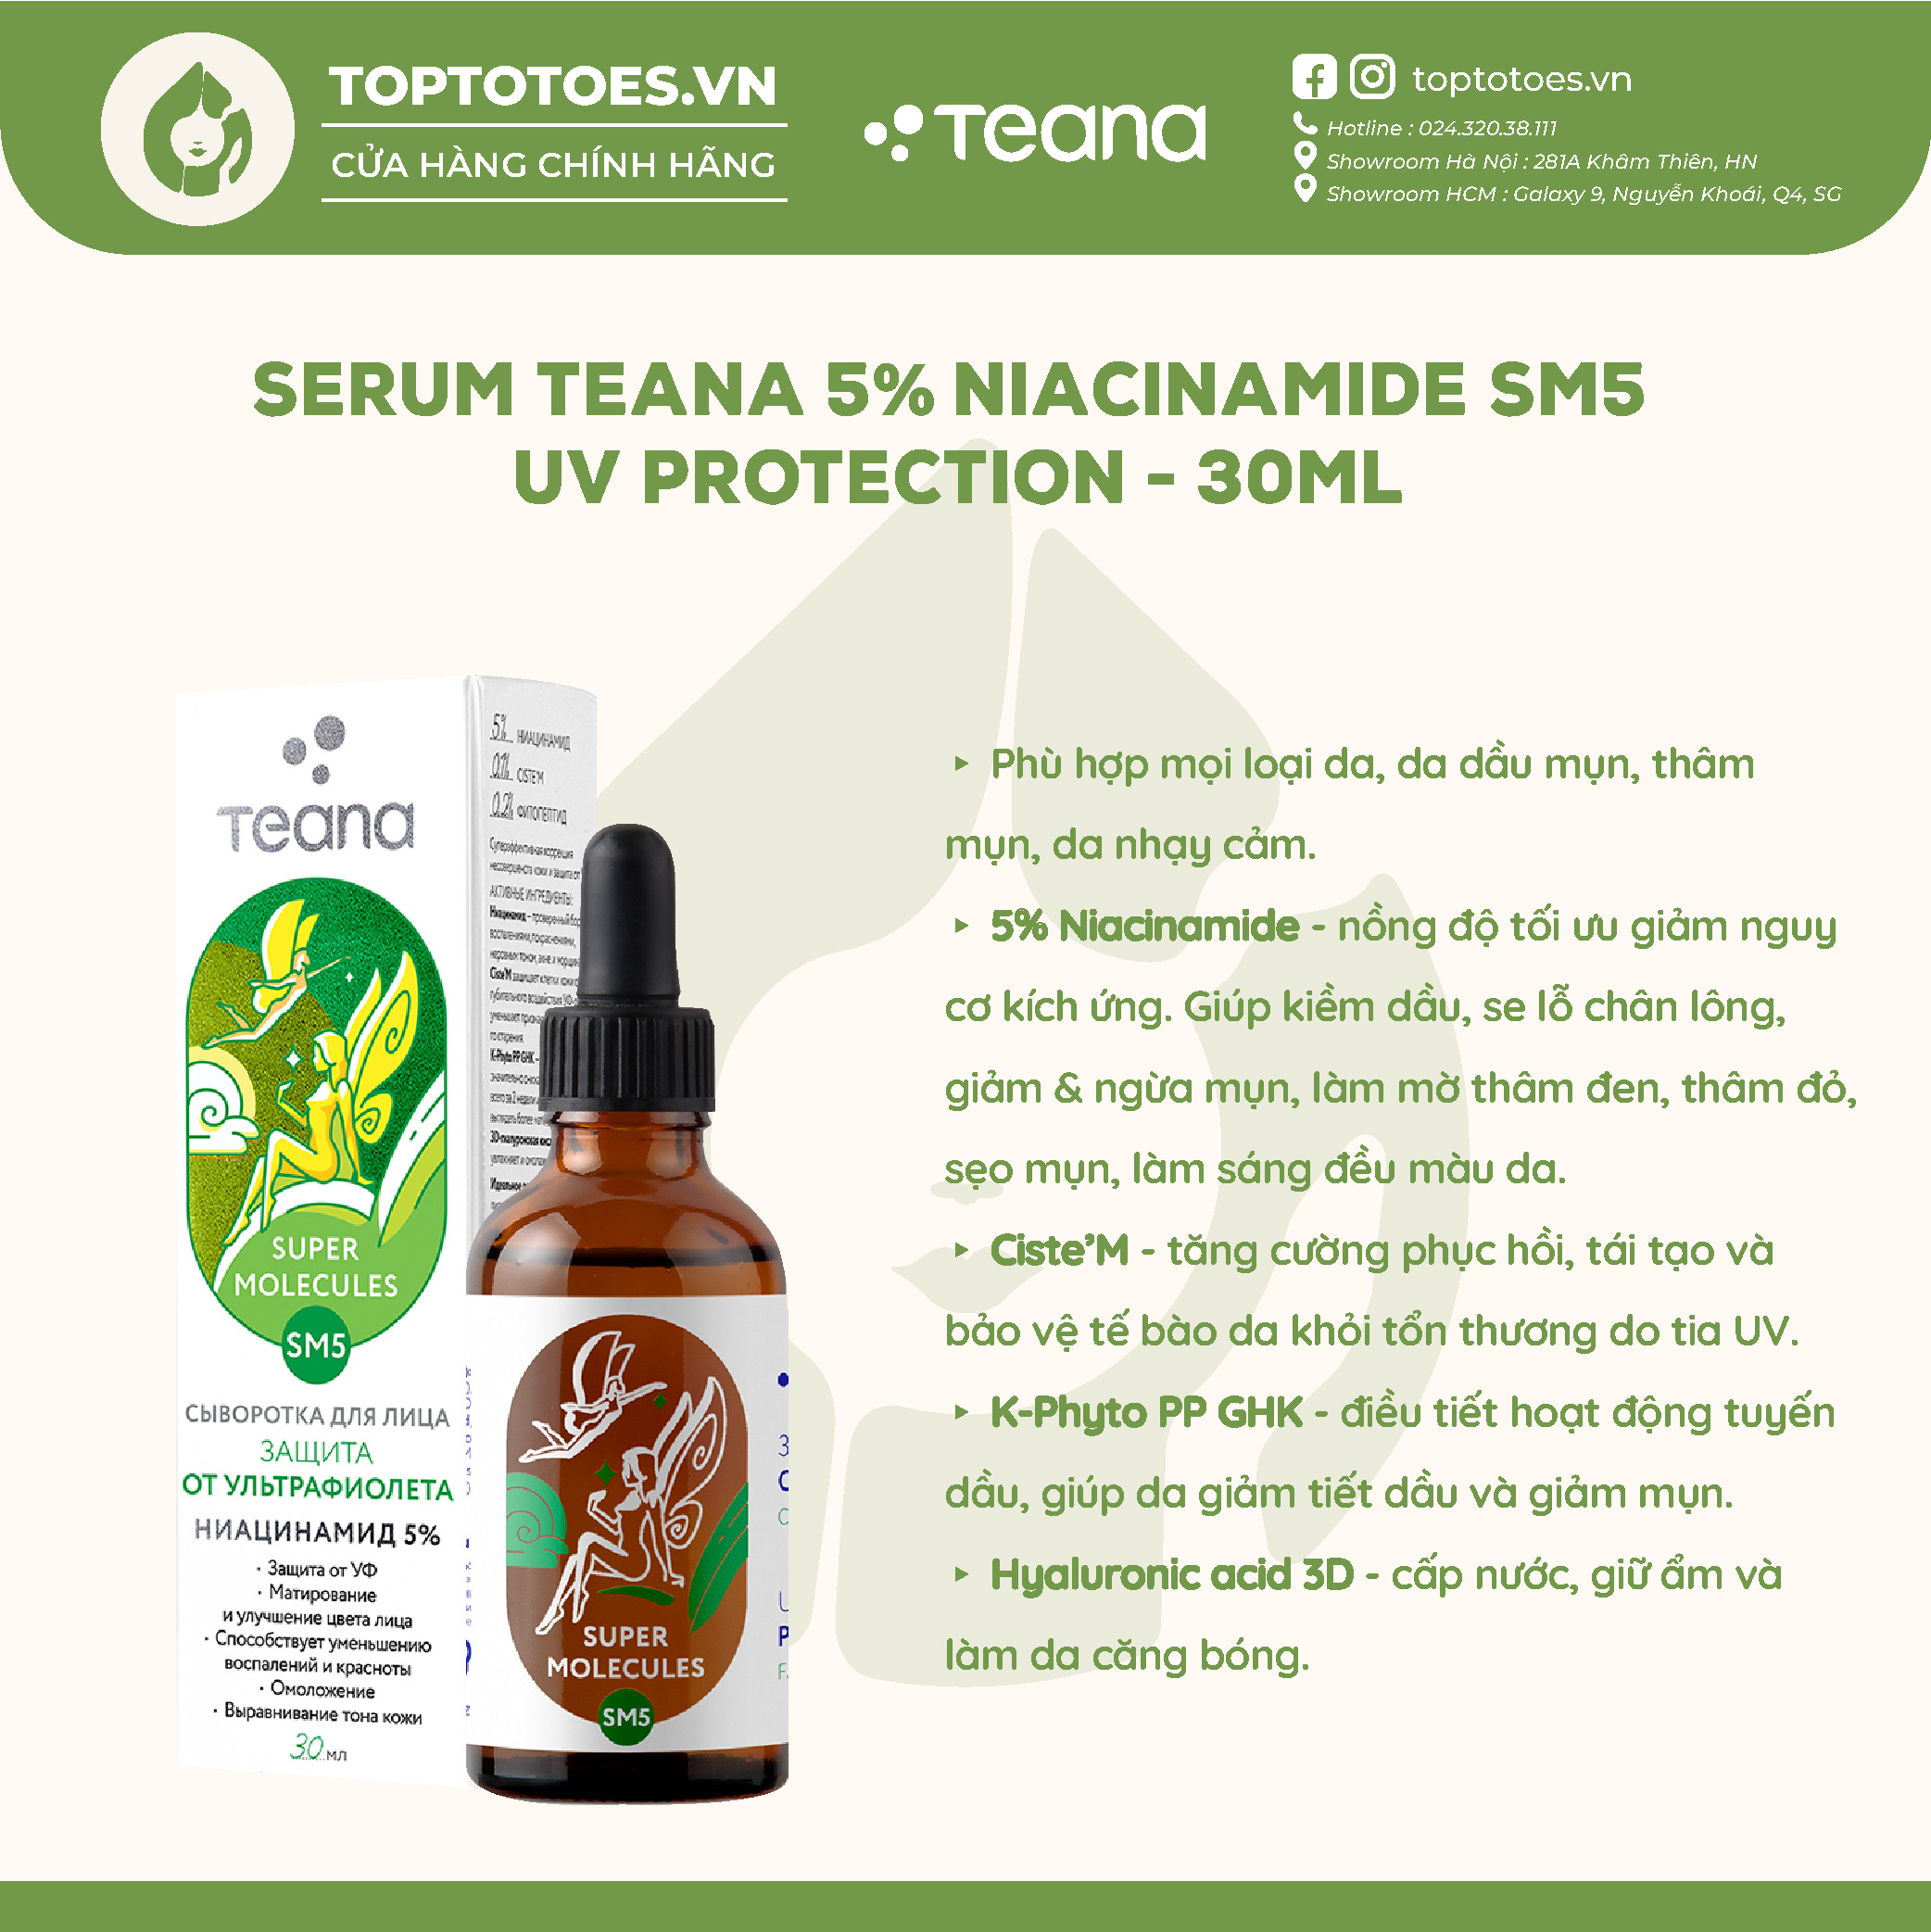 Serum Teana 5% Niacinamide SM5 Super Molecules UV Protection kiềm dầu ngừa